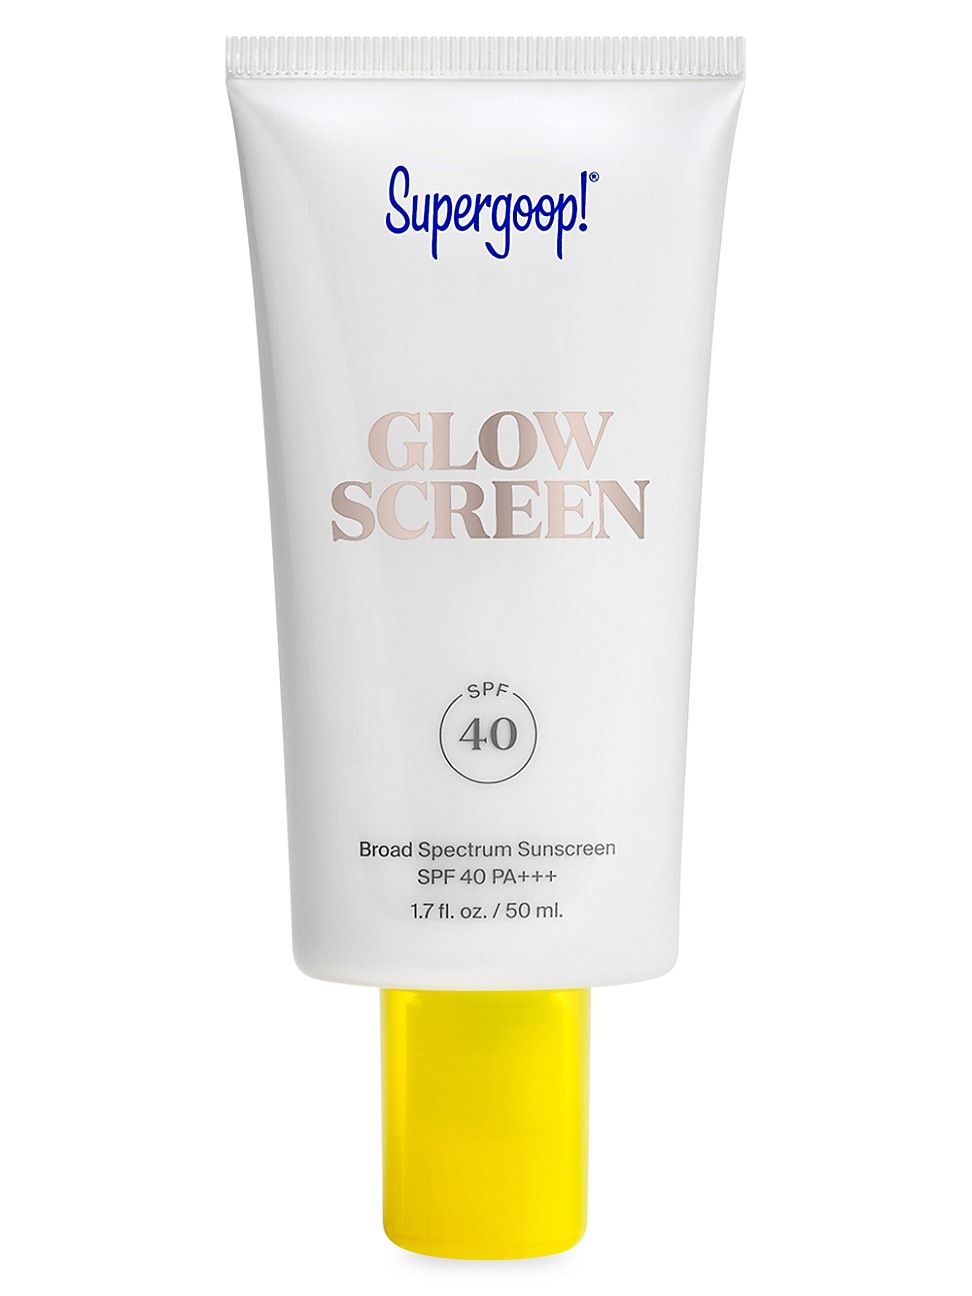 Glow Screen Broad Spectrum Sunscreen SPF 40 PA+++ | Saks Fifth Avenue